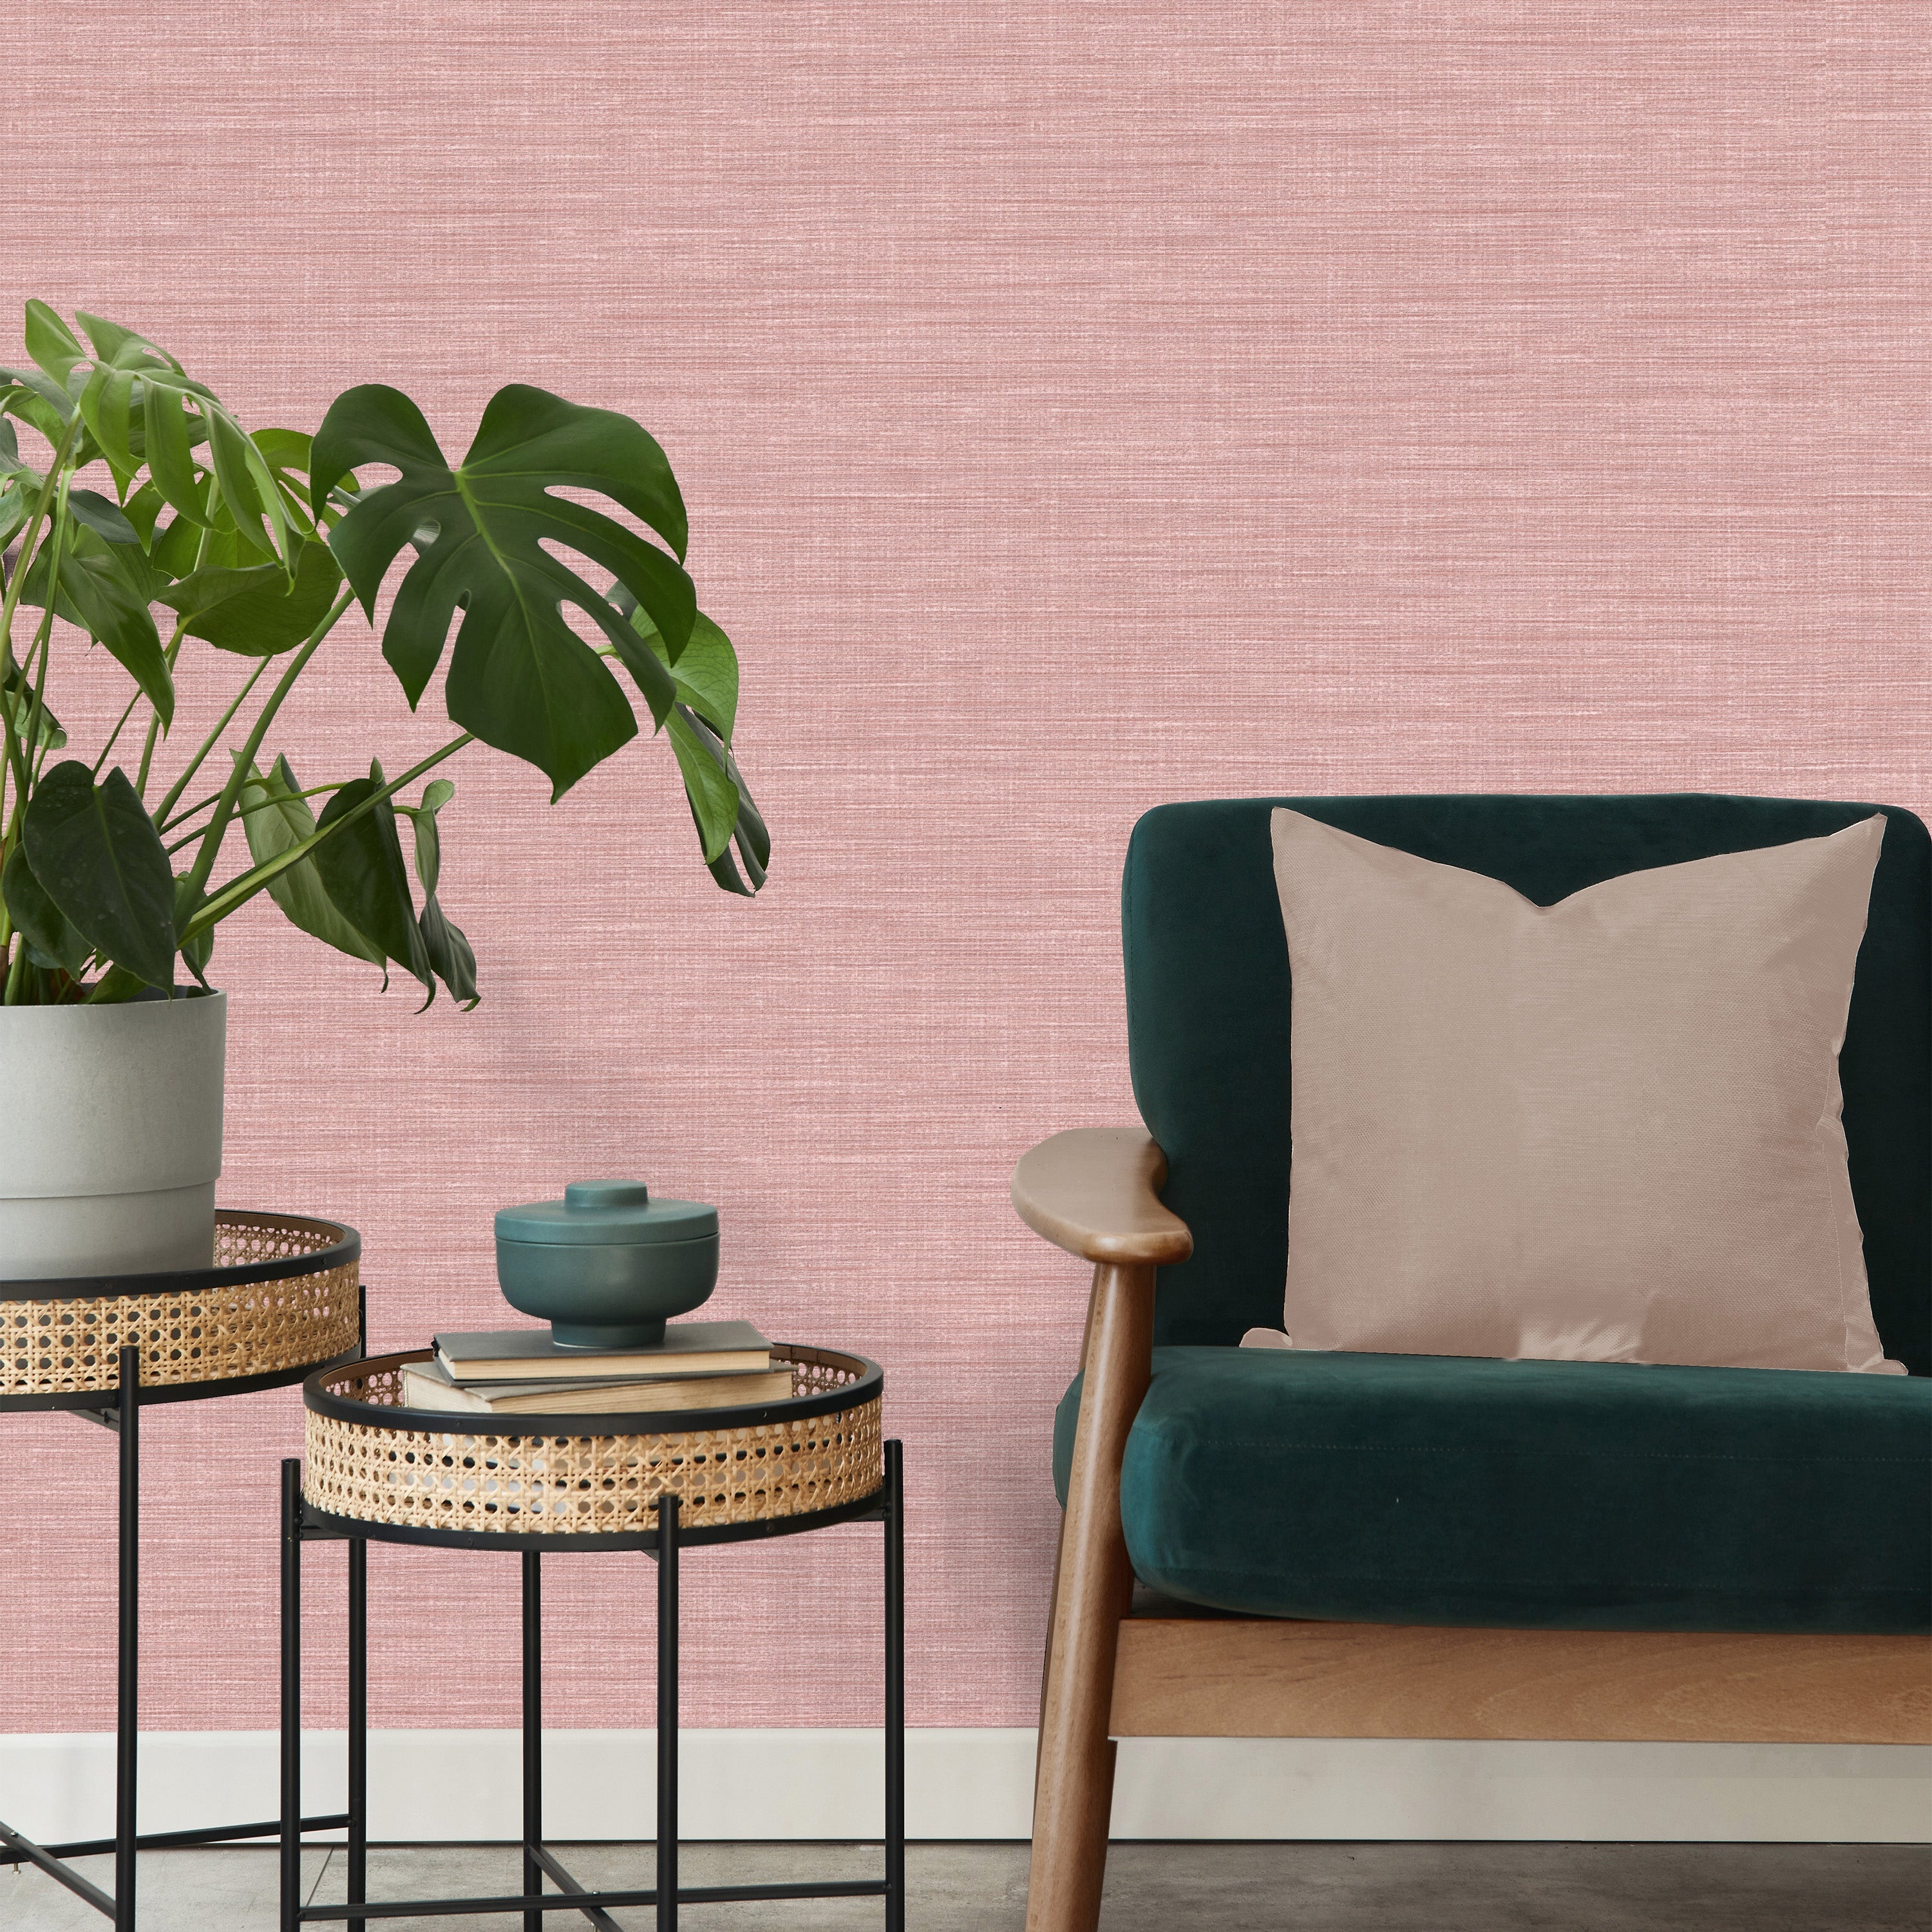 Akina Texture Blush | Fine Decor Wallpaper | M1730